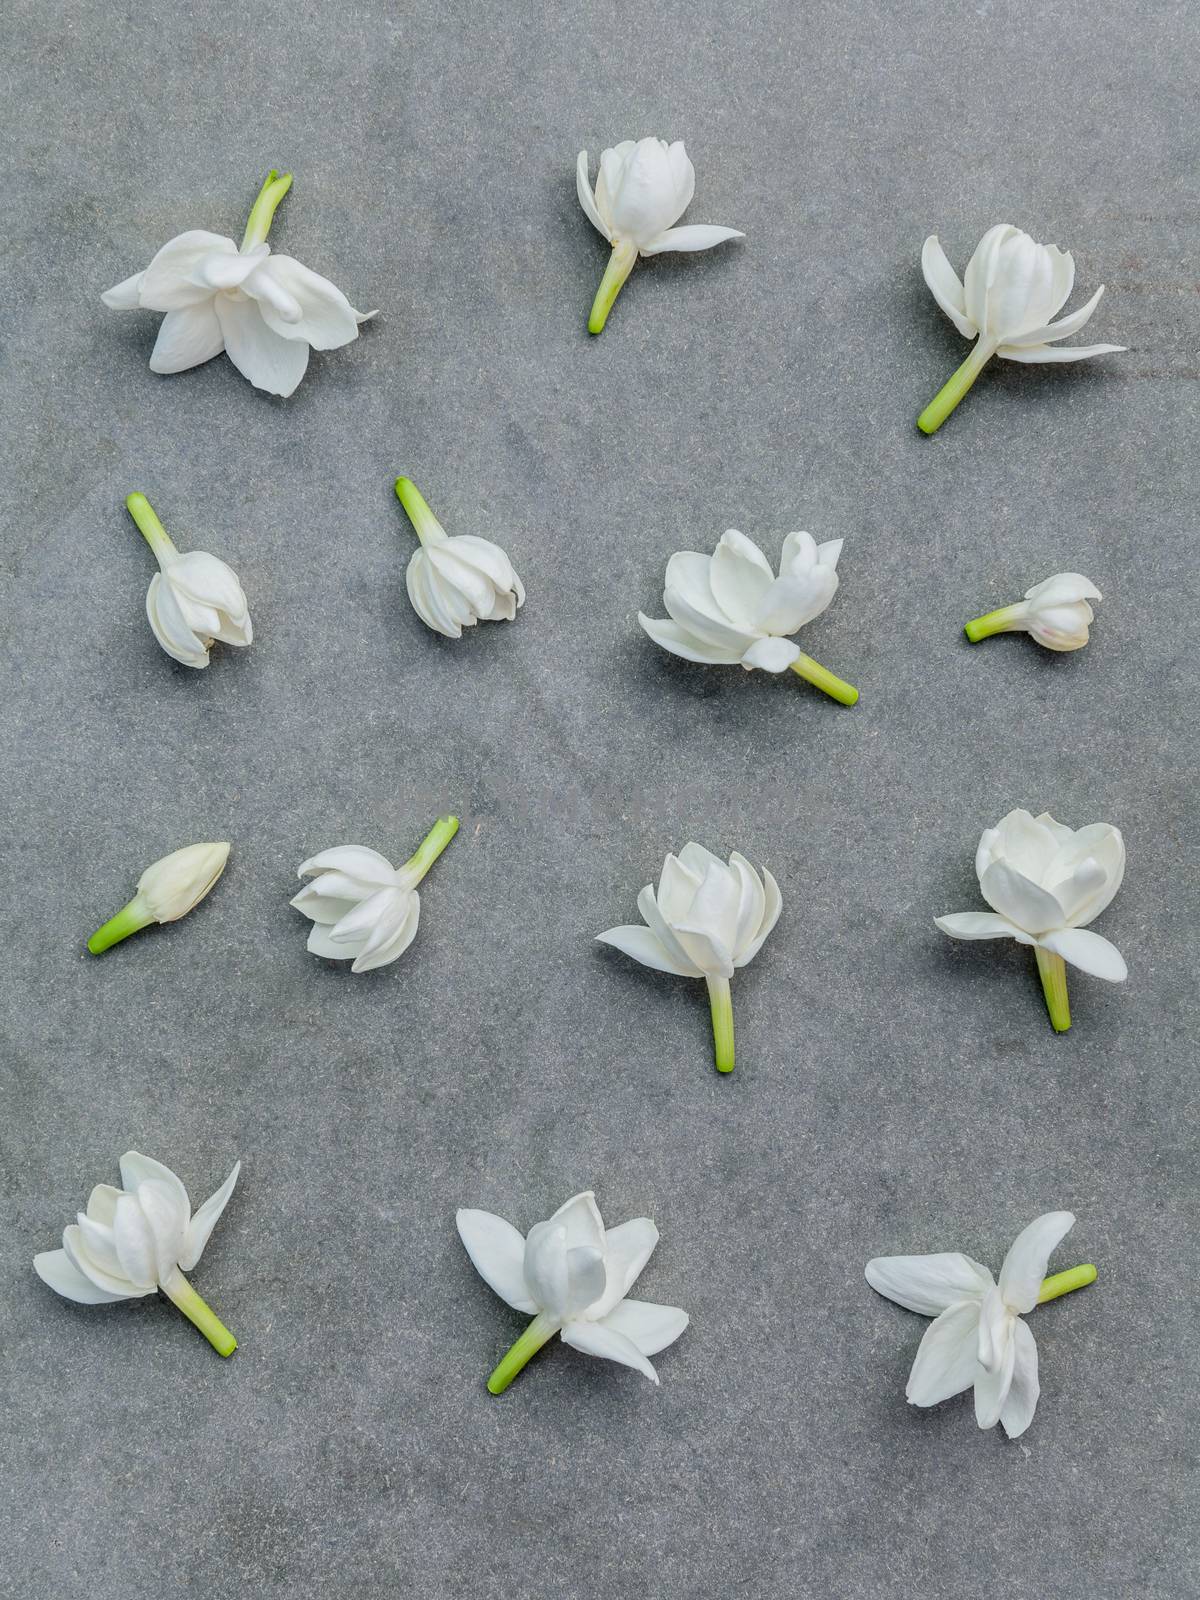 White jasmine flowers on dark concrete background. The delicate rain season flowers.